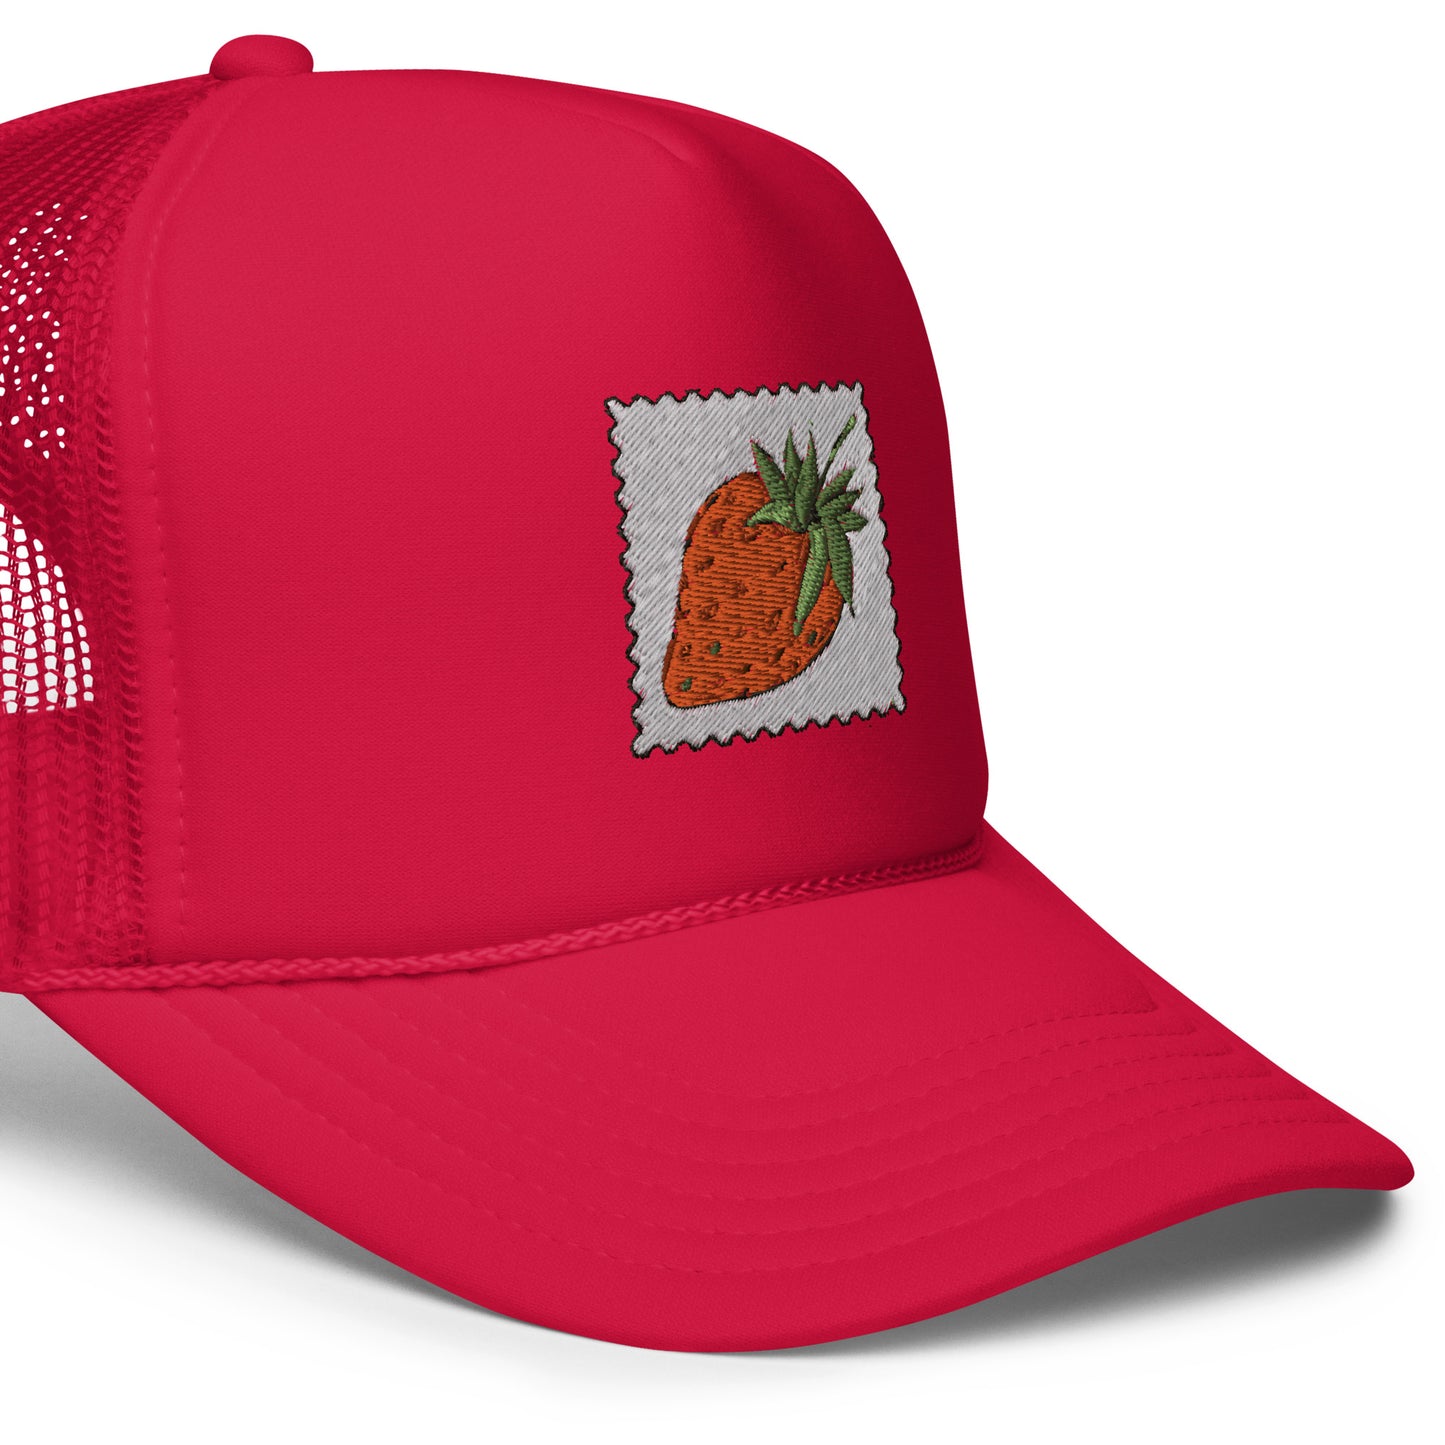 Strawberries Trucker Hat